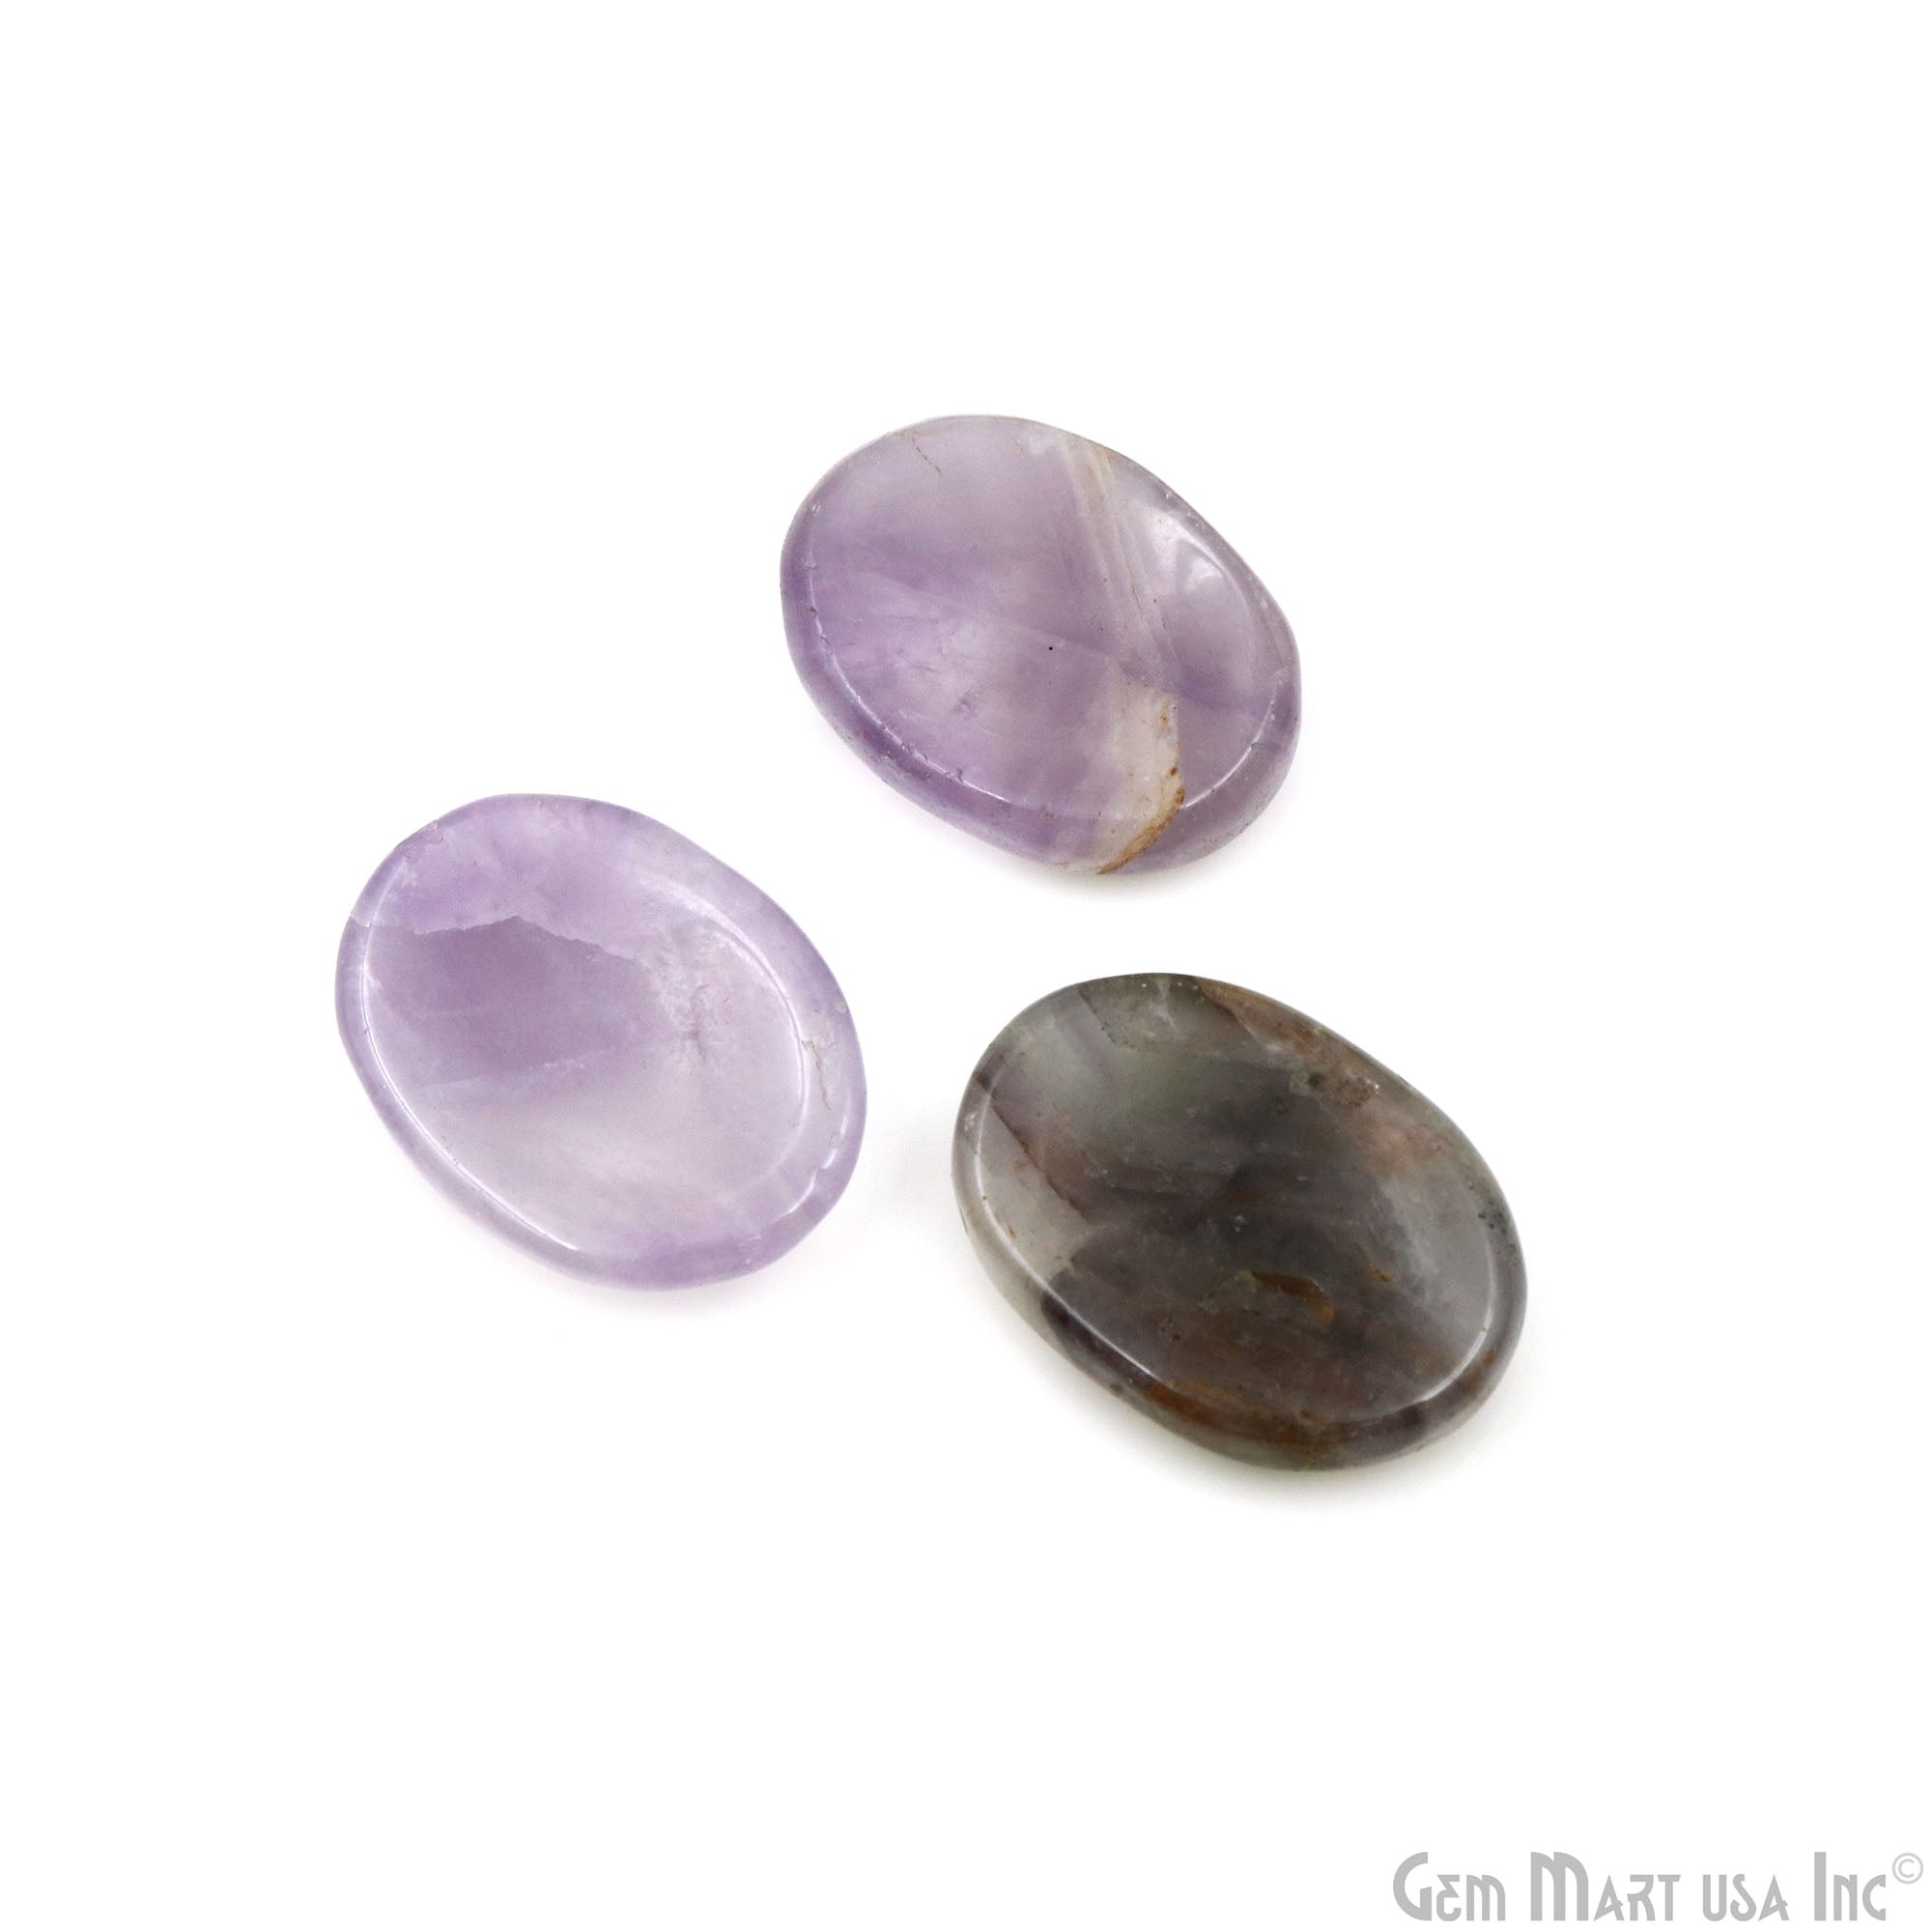 Thumb Meditation Gemstones 39x29mm Oval Hand Curved Thumb Massager Stones